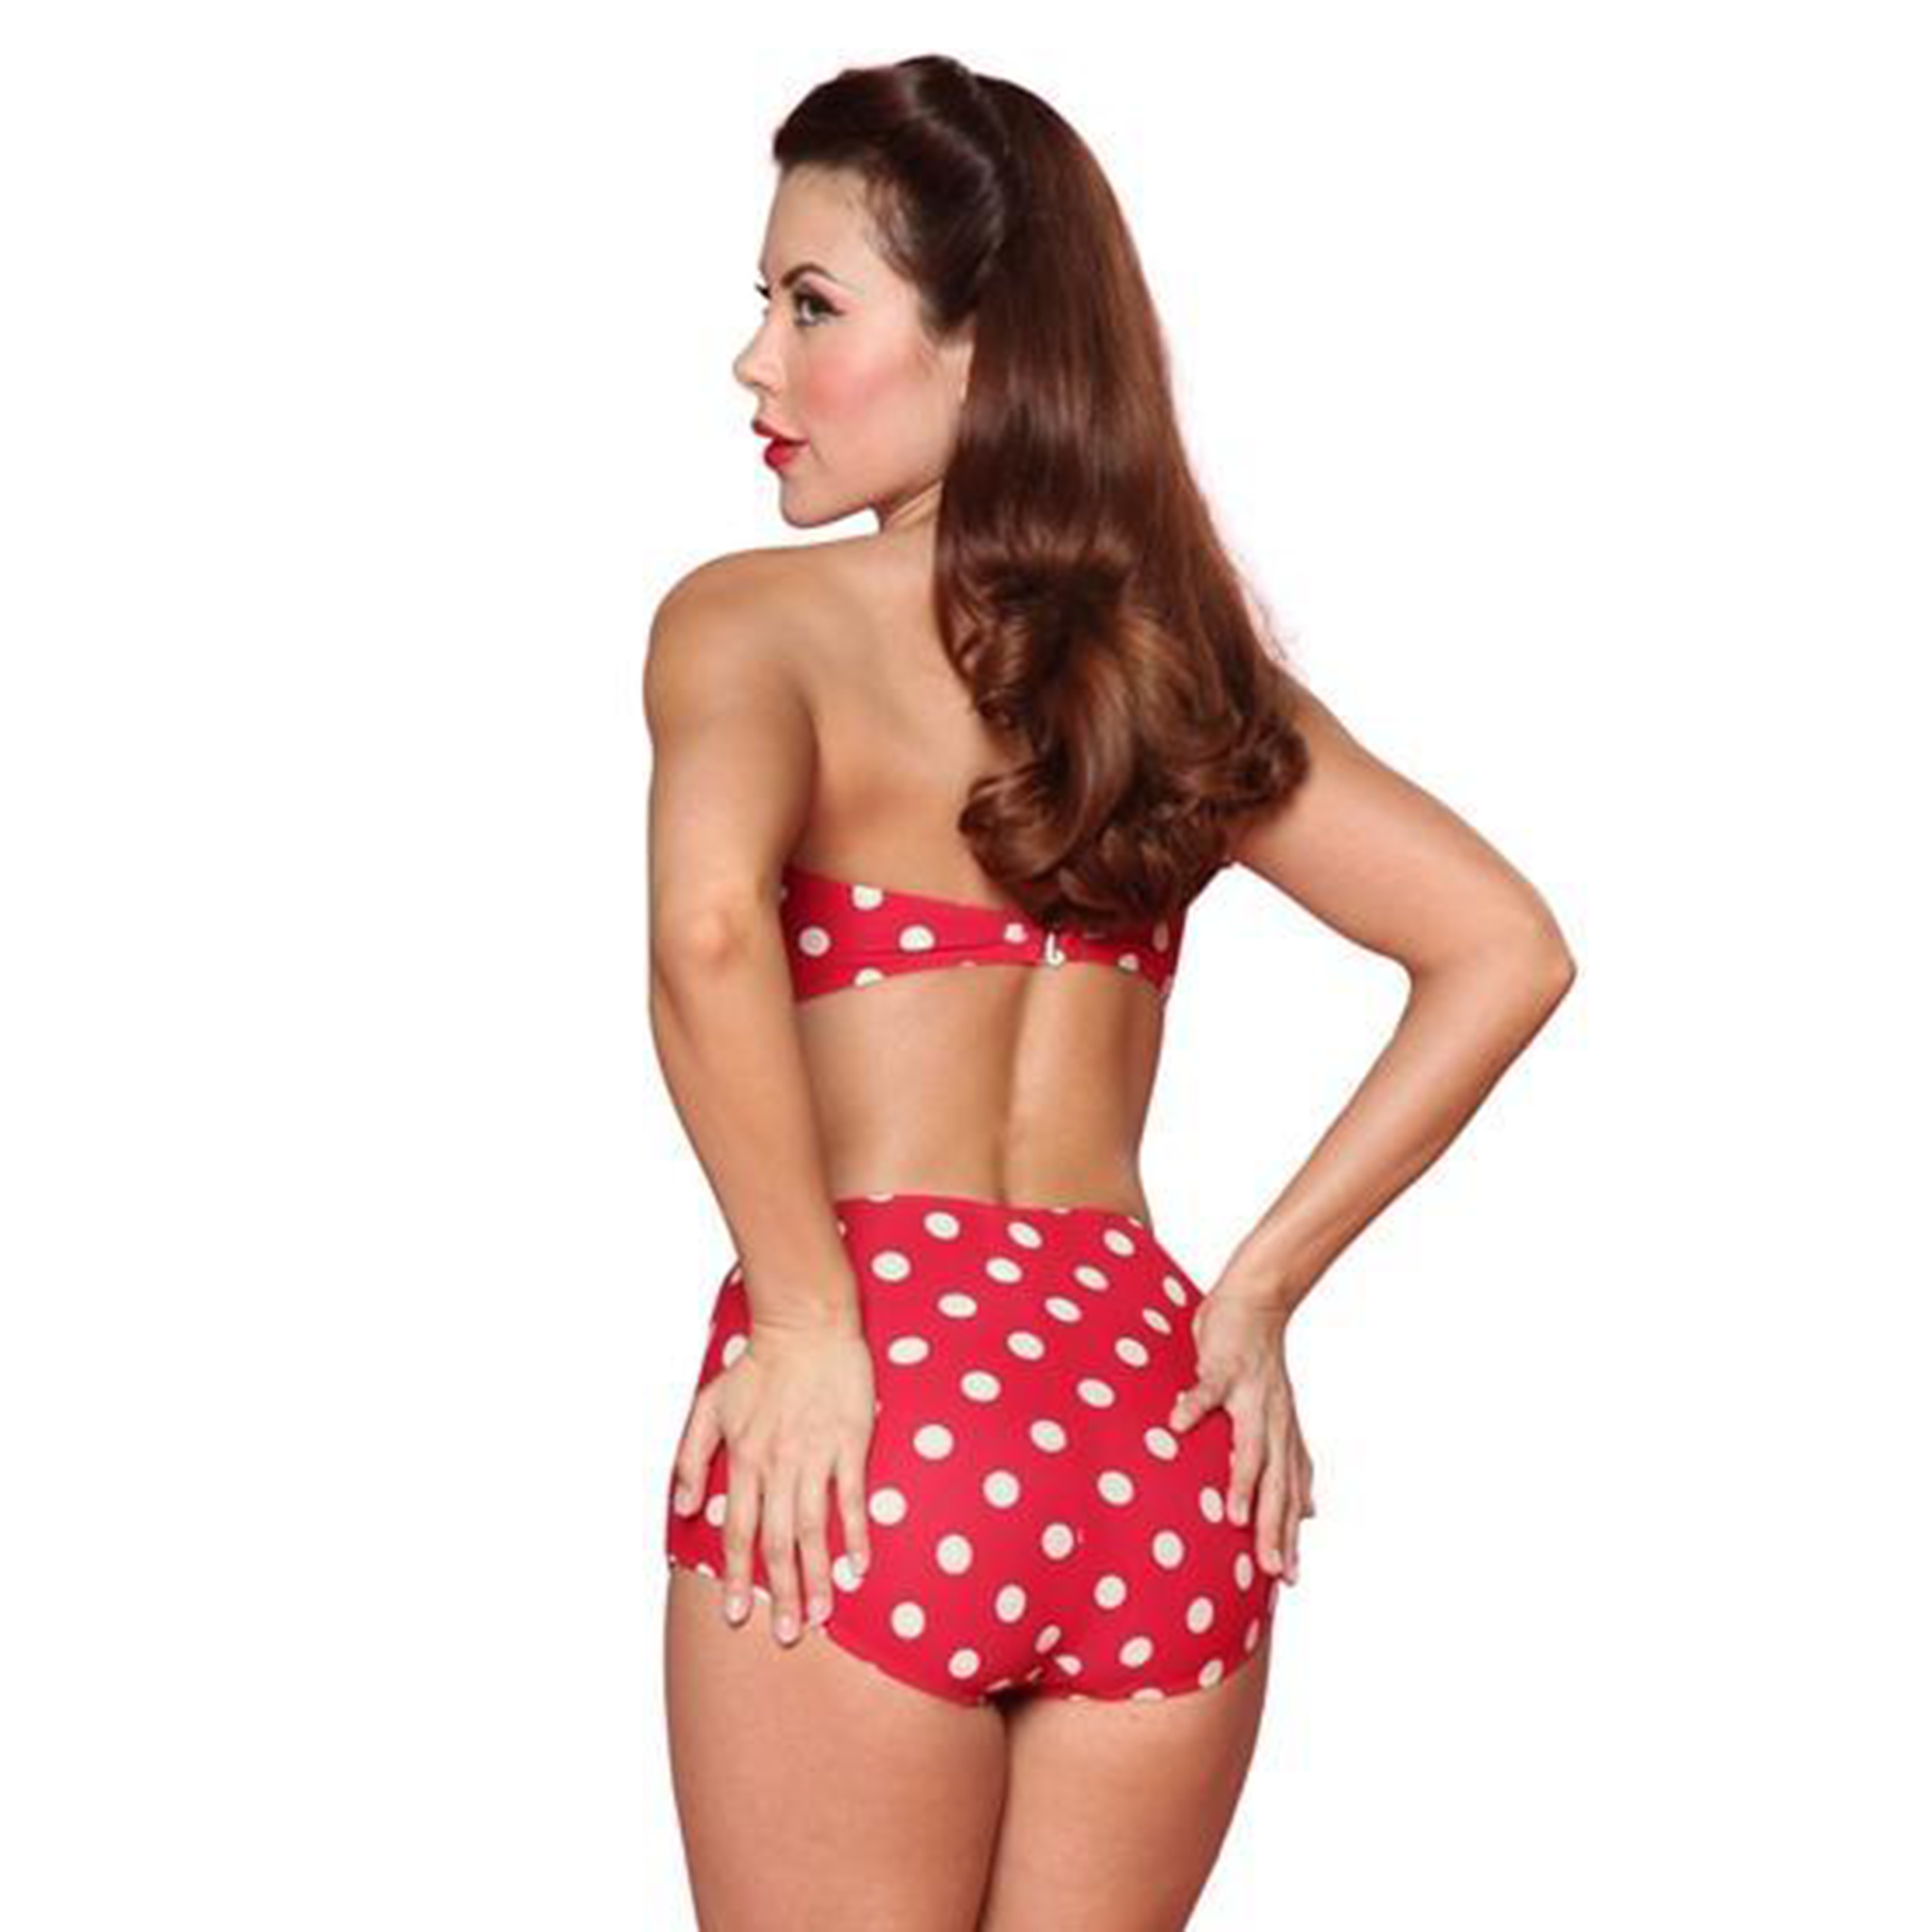 Esther Williams Classic Polka Dot Swimsuit Bottom E09006P - Red/White